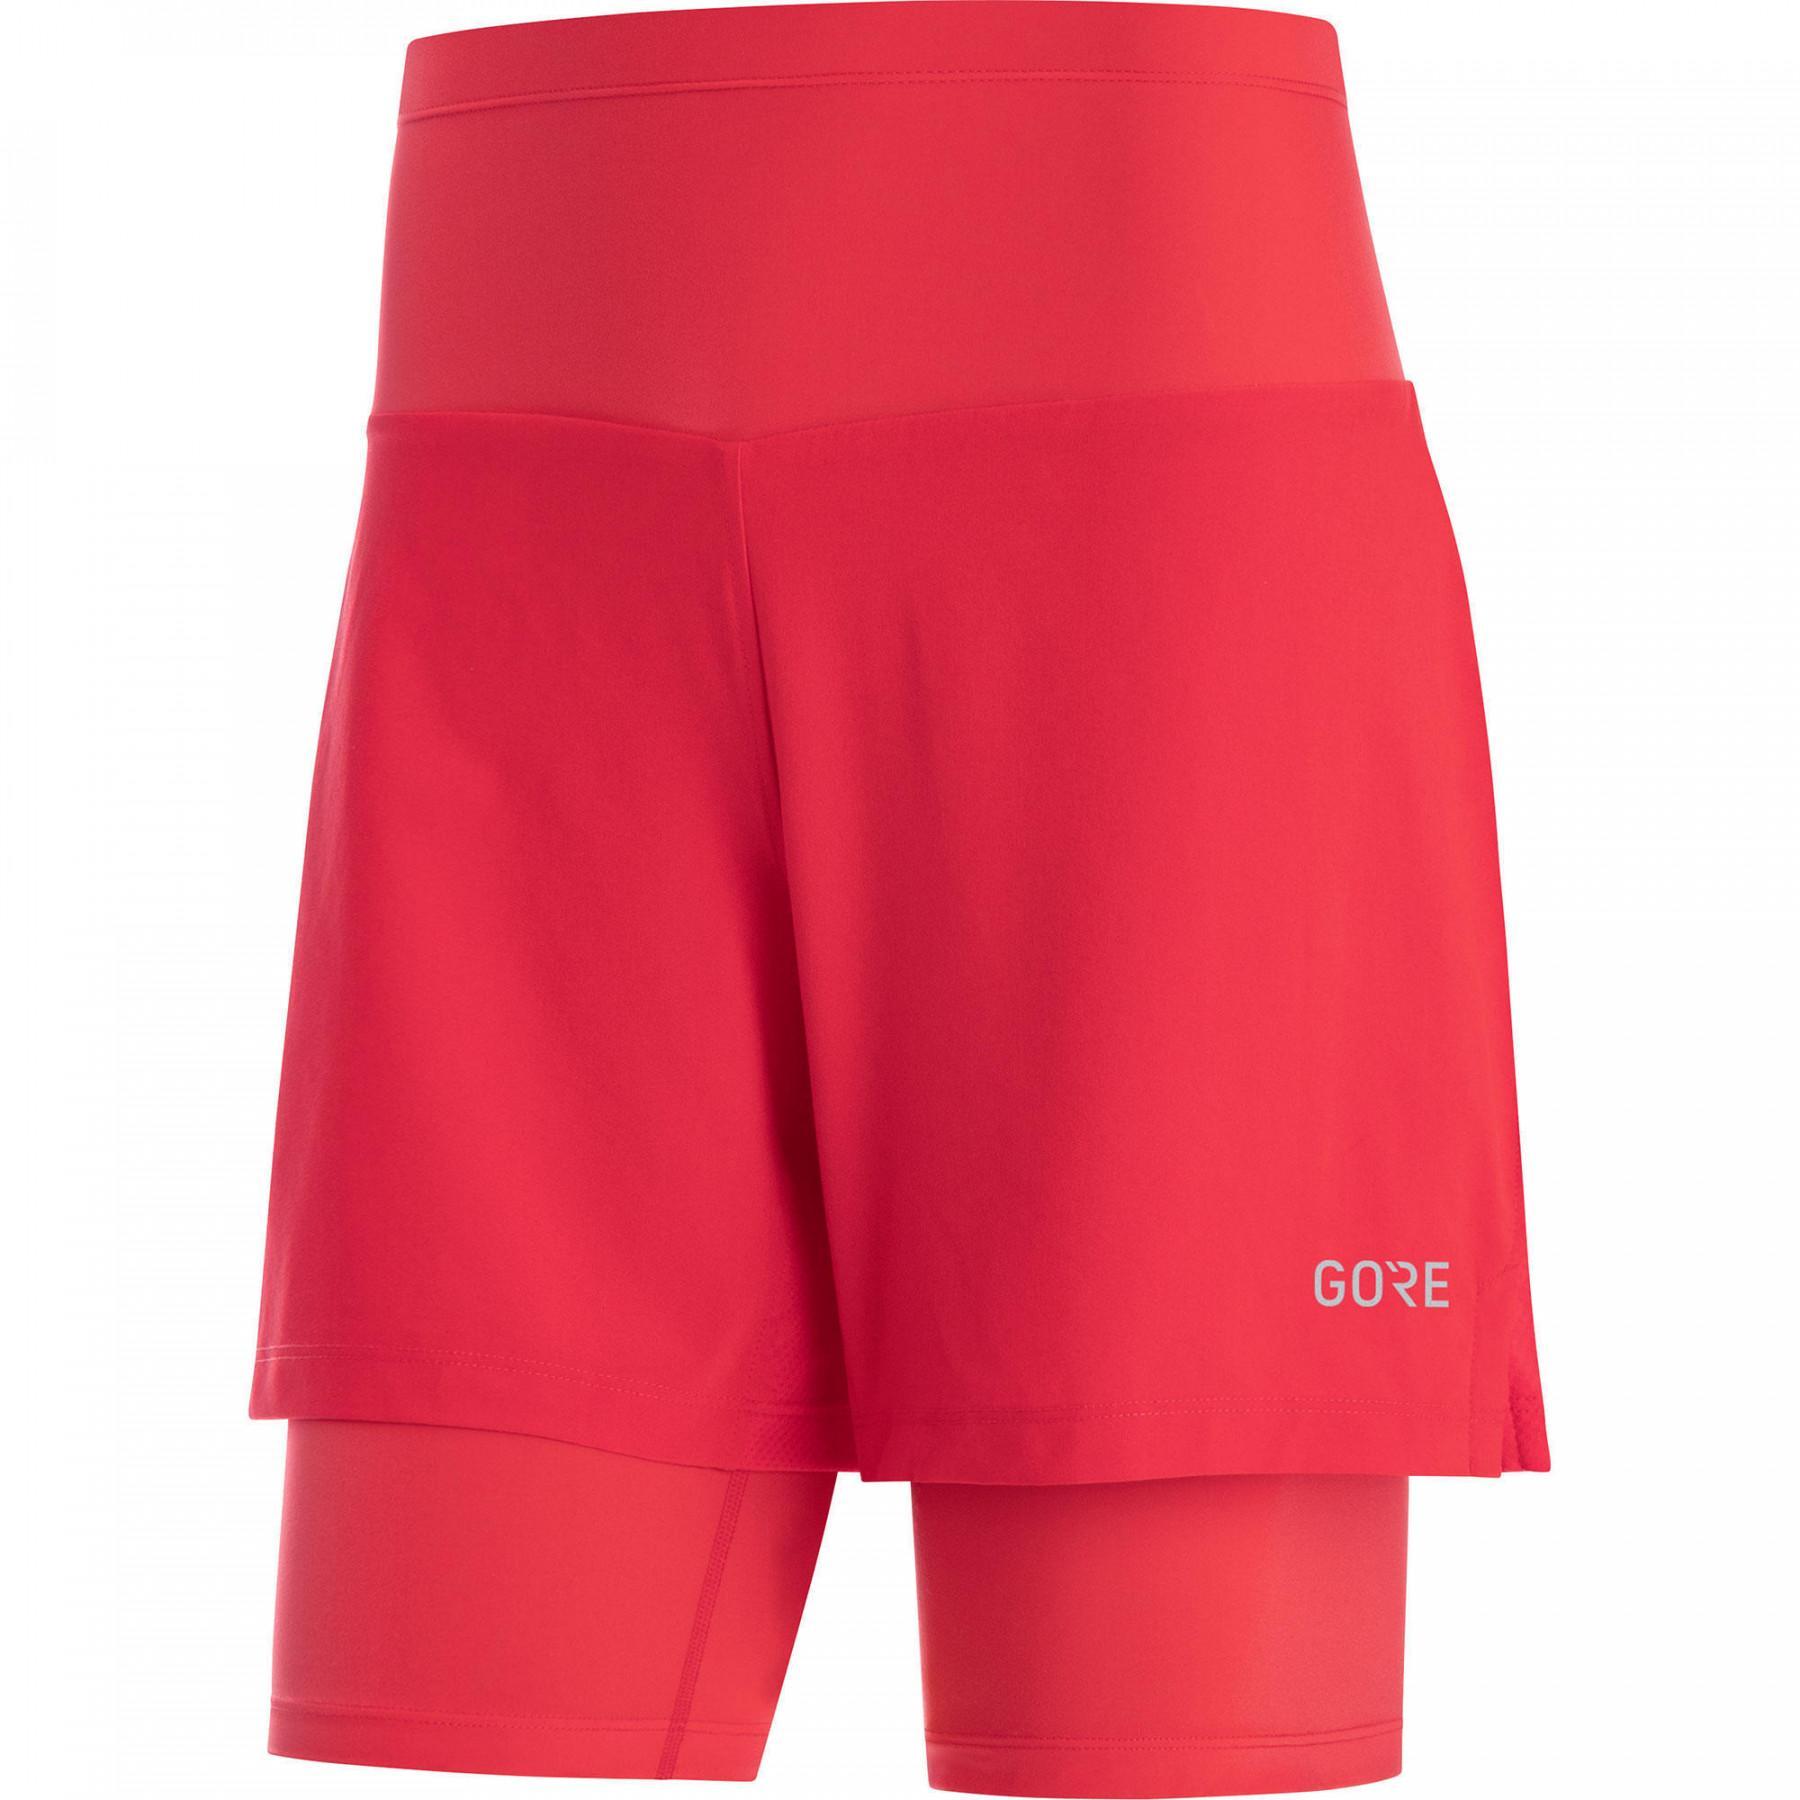 Women's shorts Gore R5 2in1